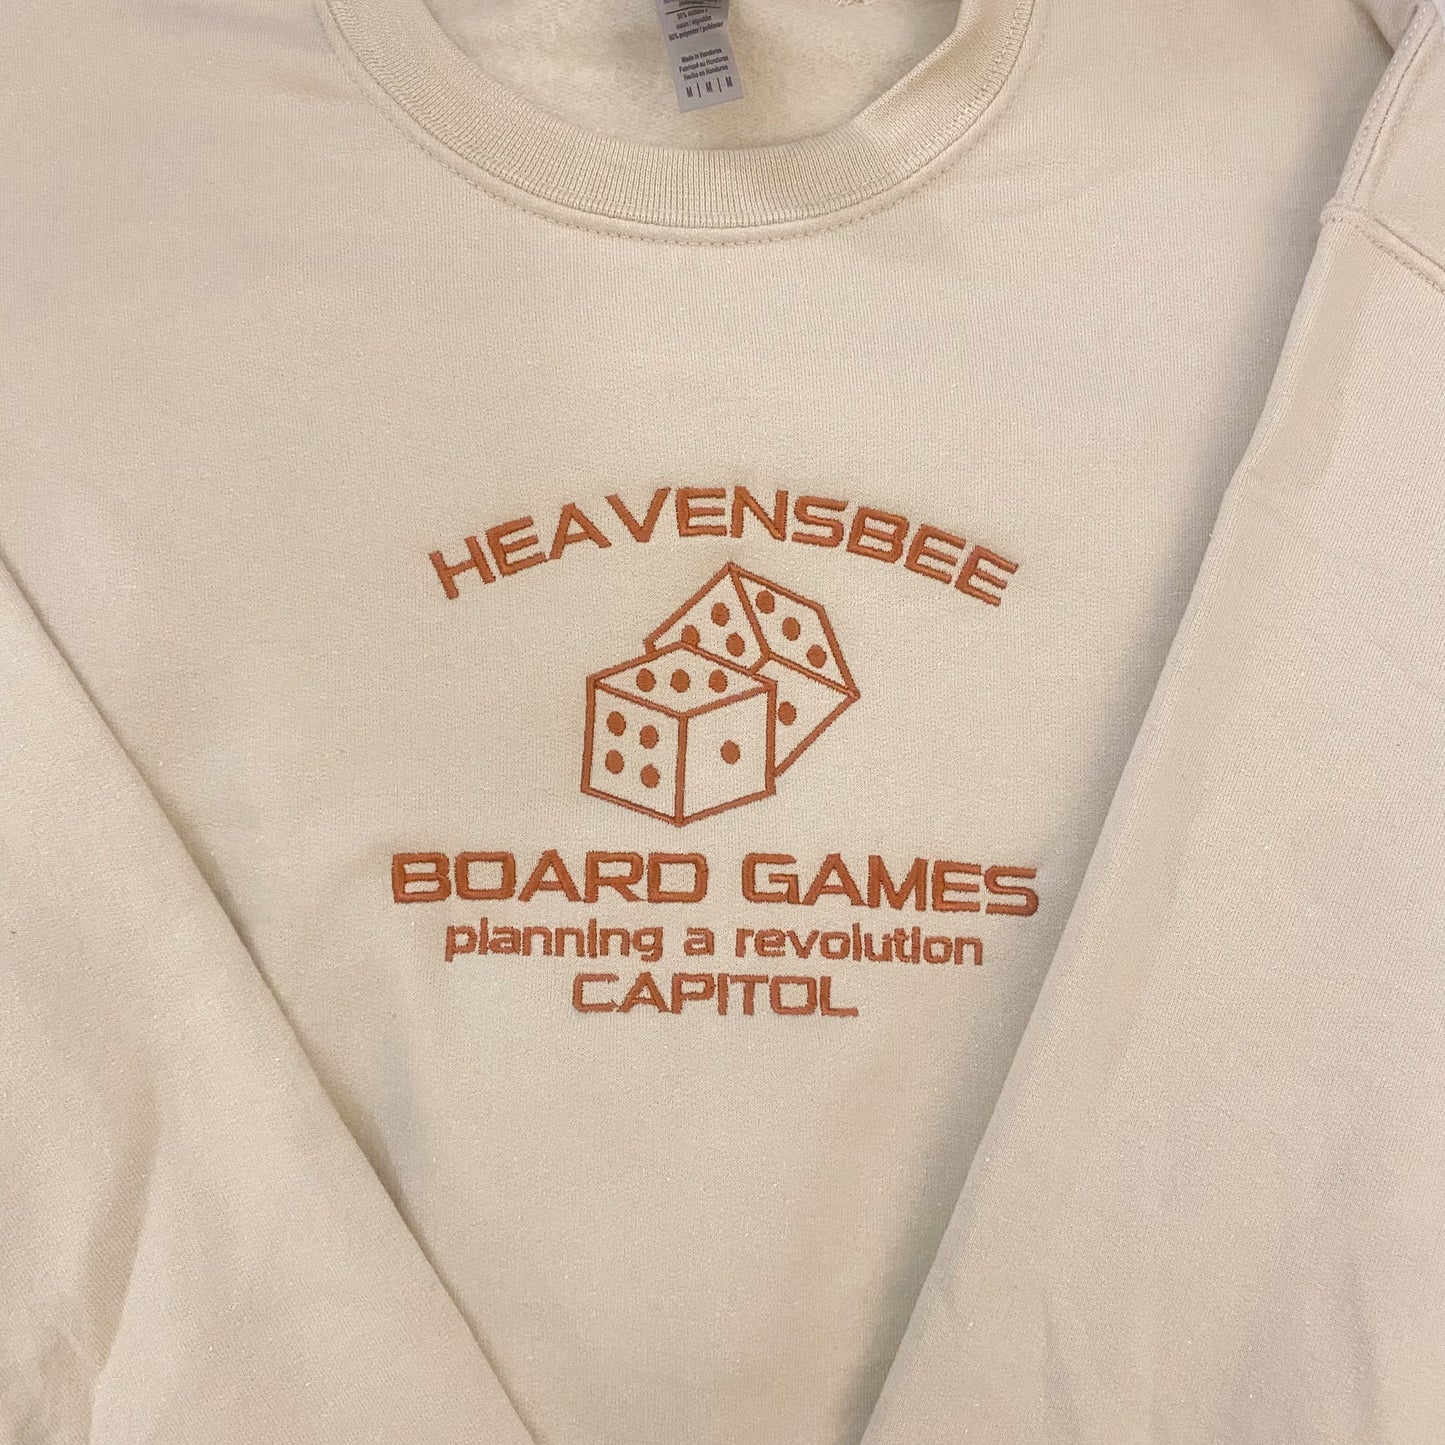 Heavensbee Board Games